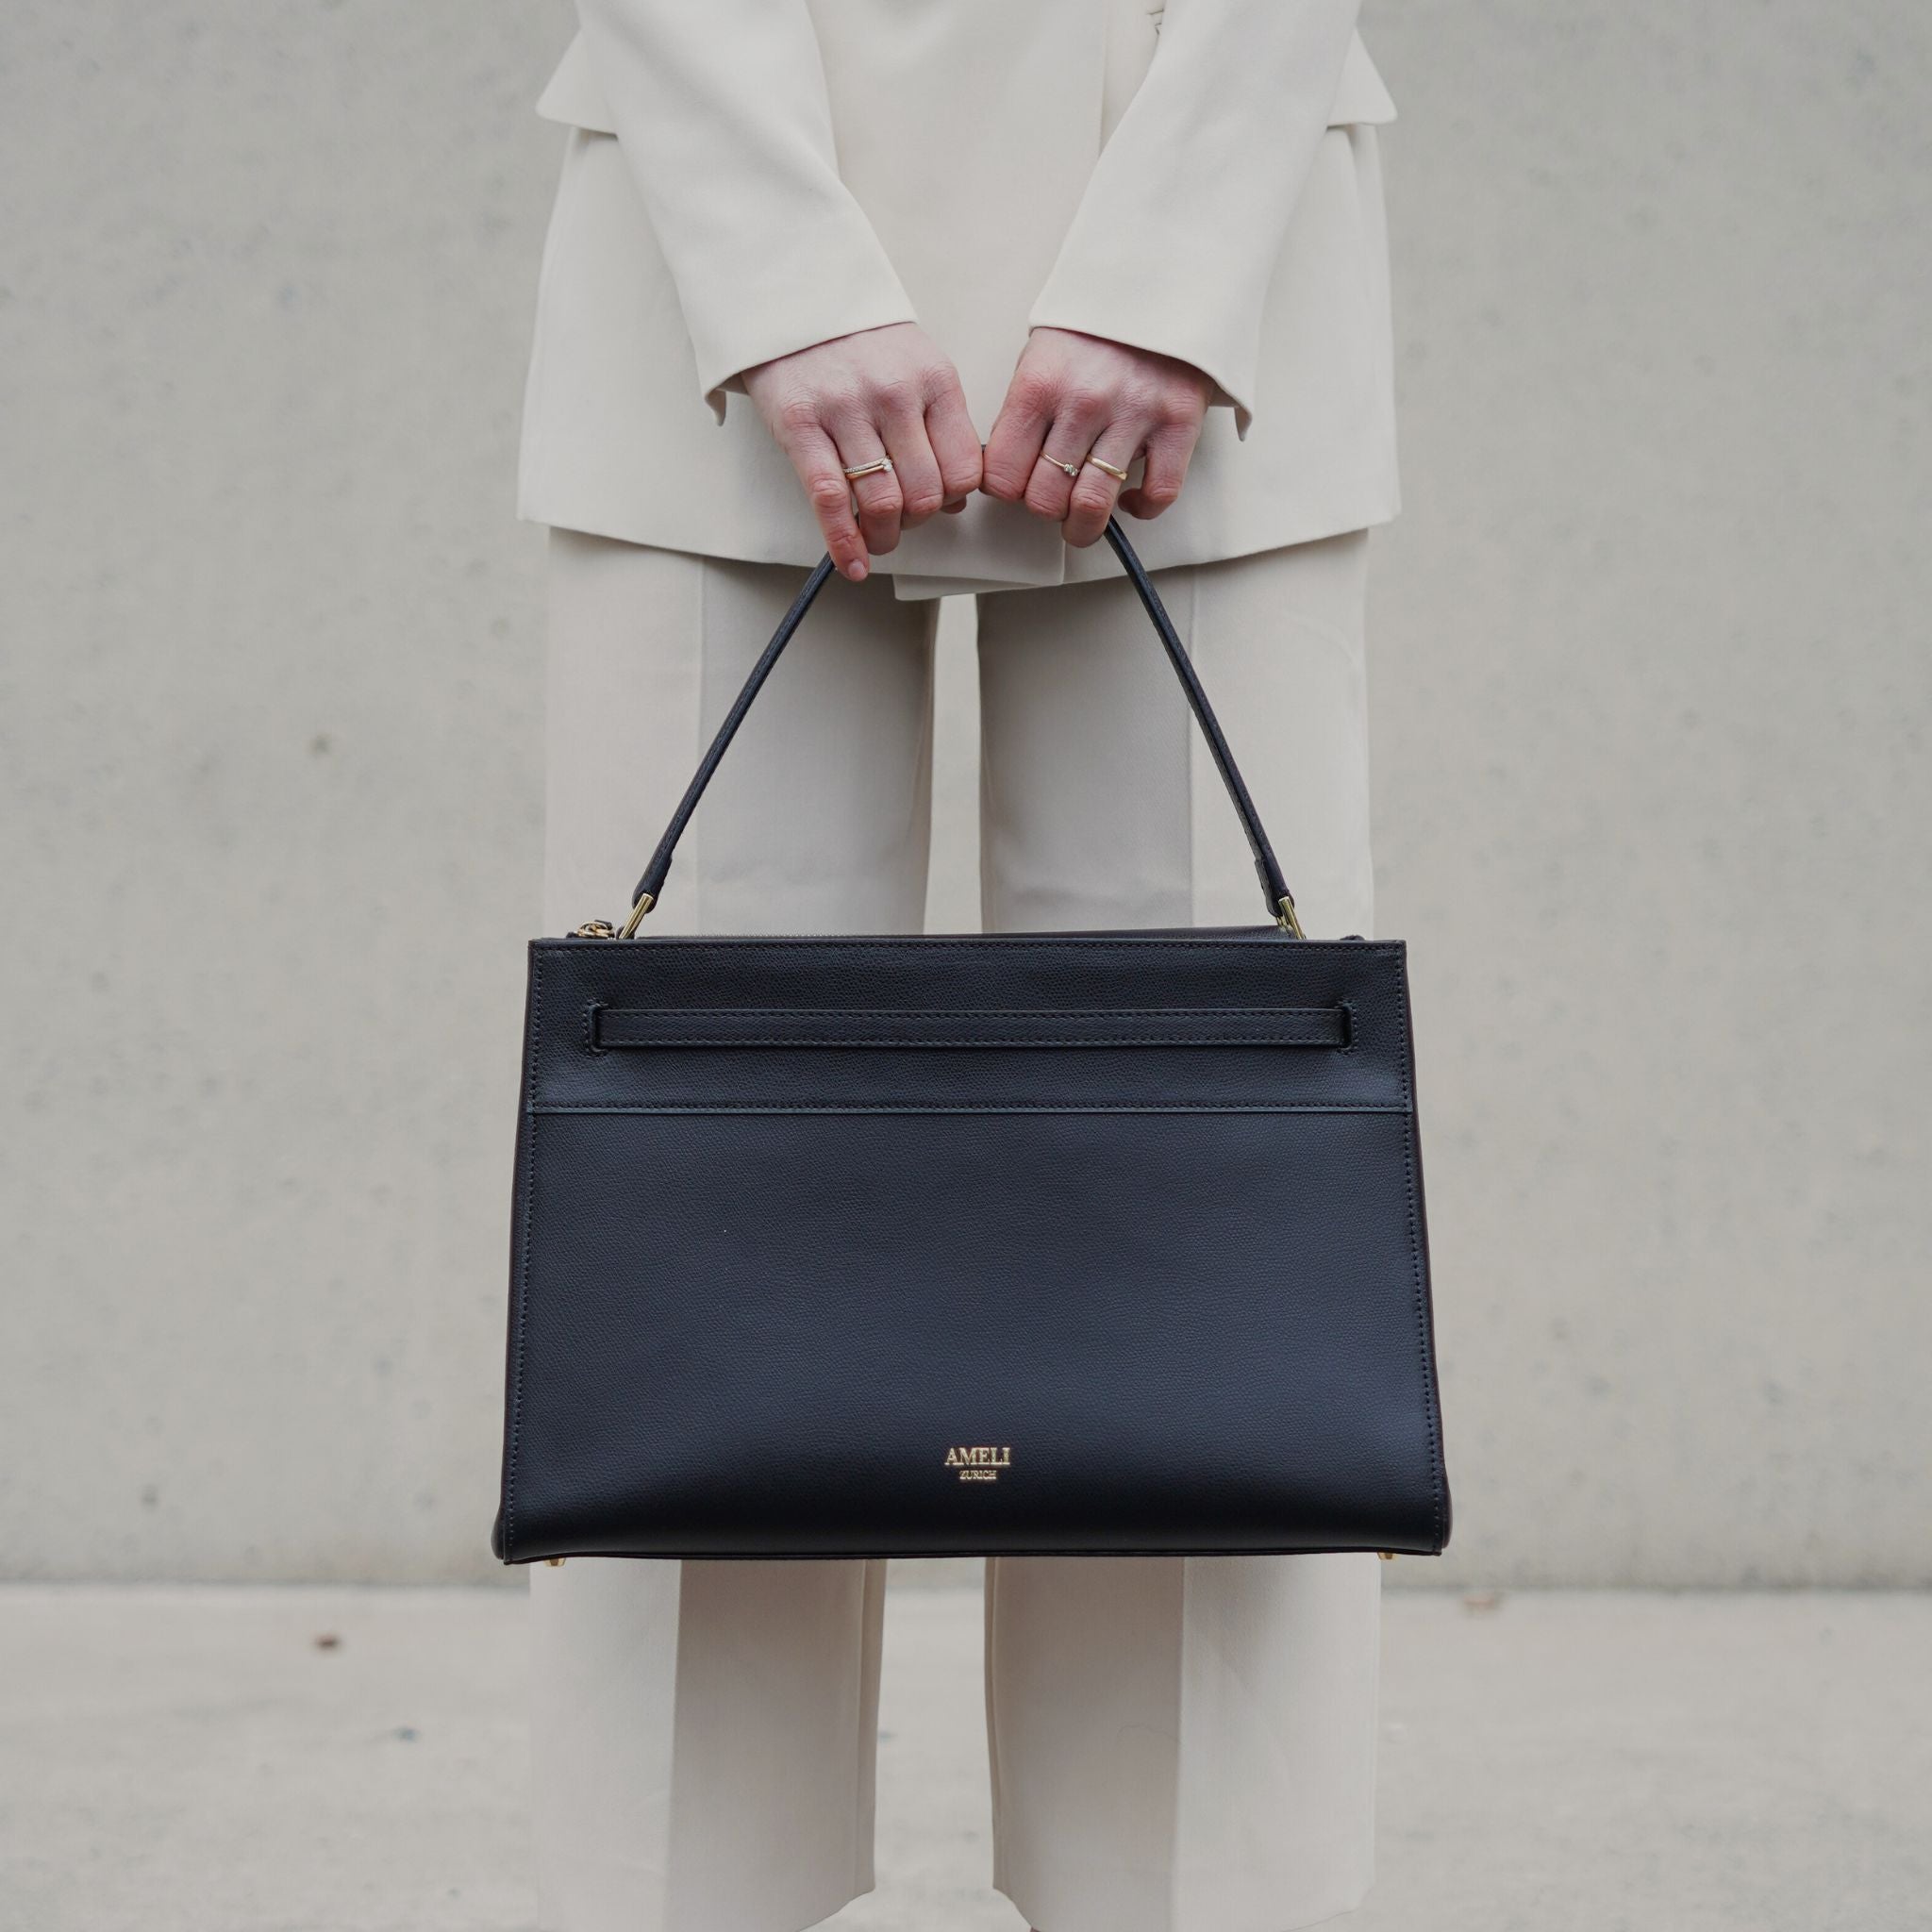 AMELI Zurich | SEEFELD | Black | Pebbled Leather | Top handle bag